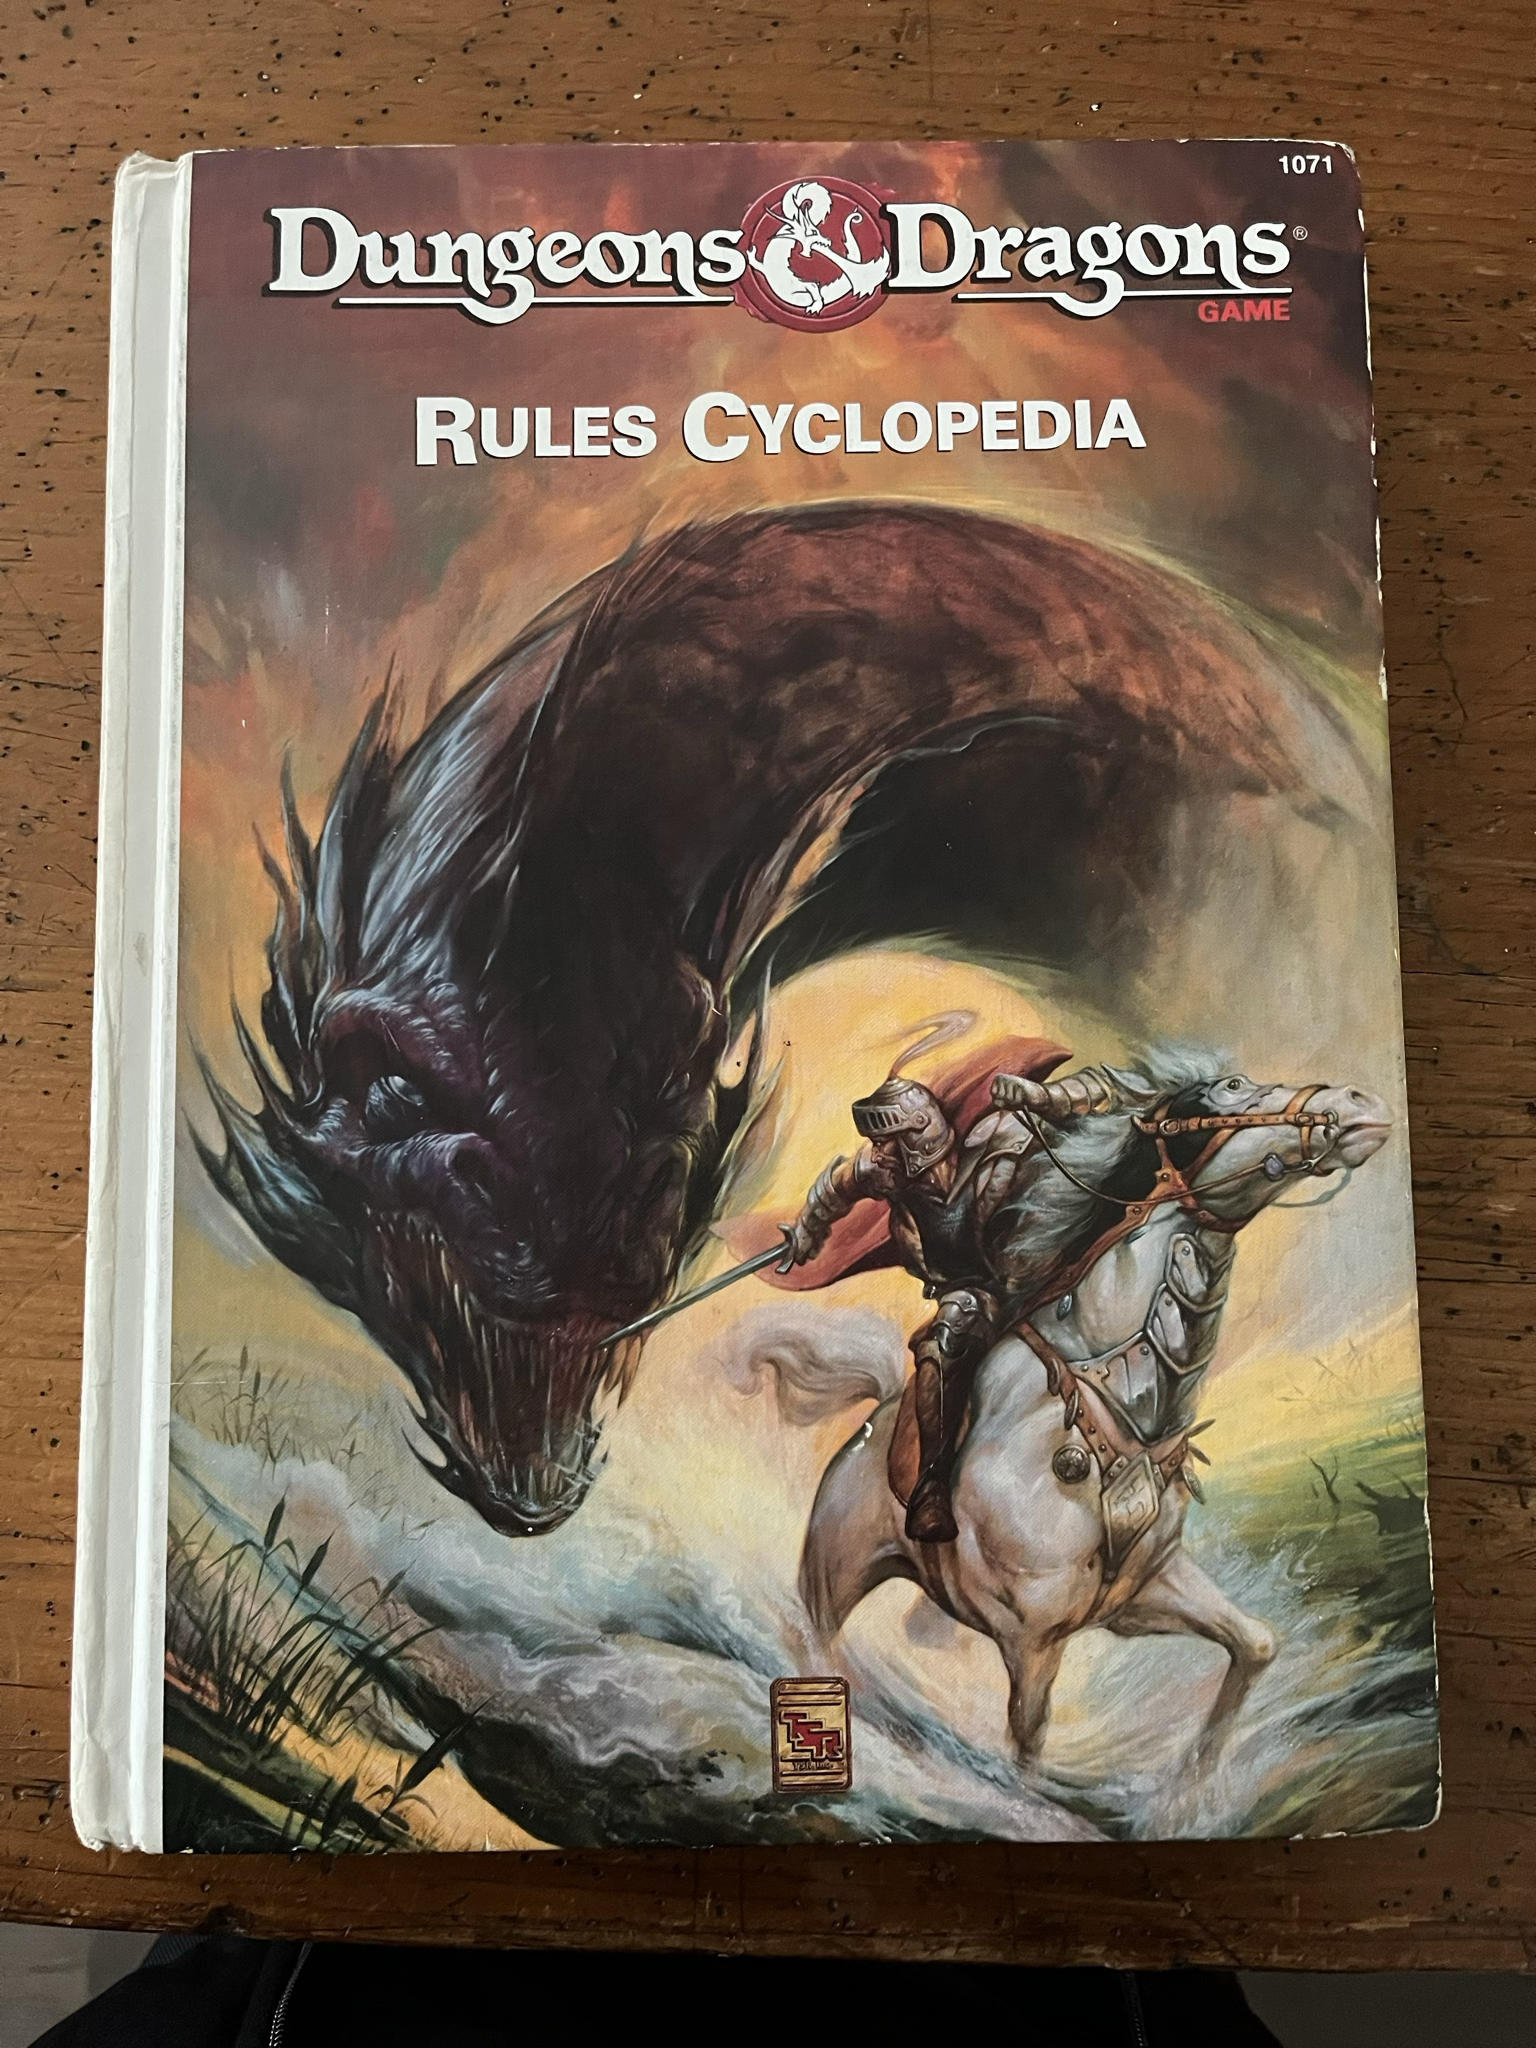 Rules Cyclopedia